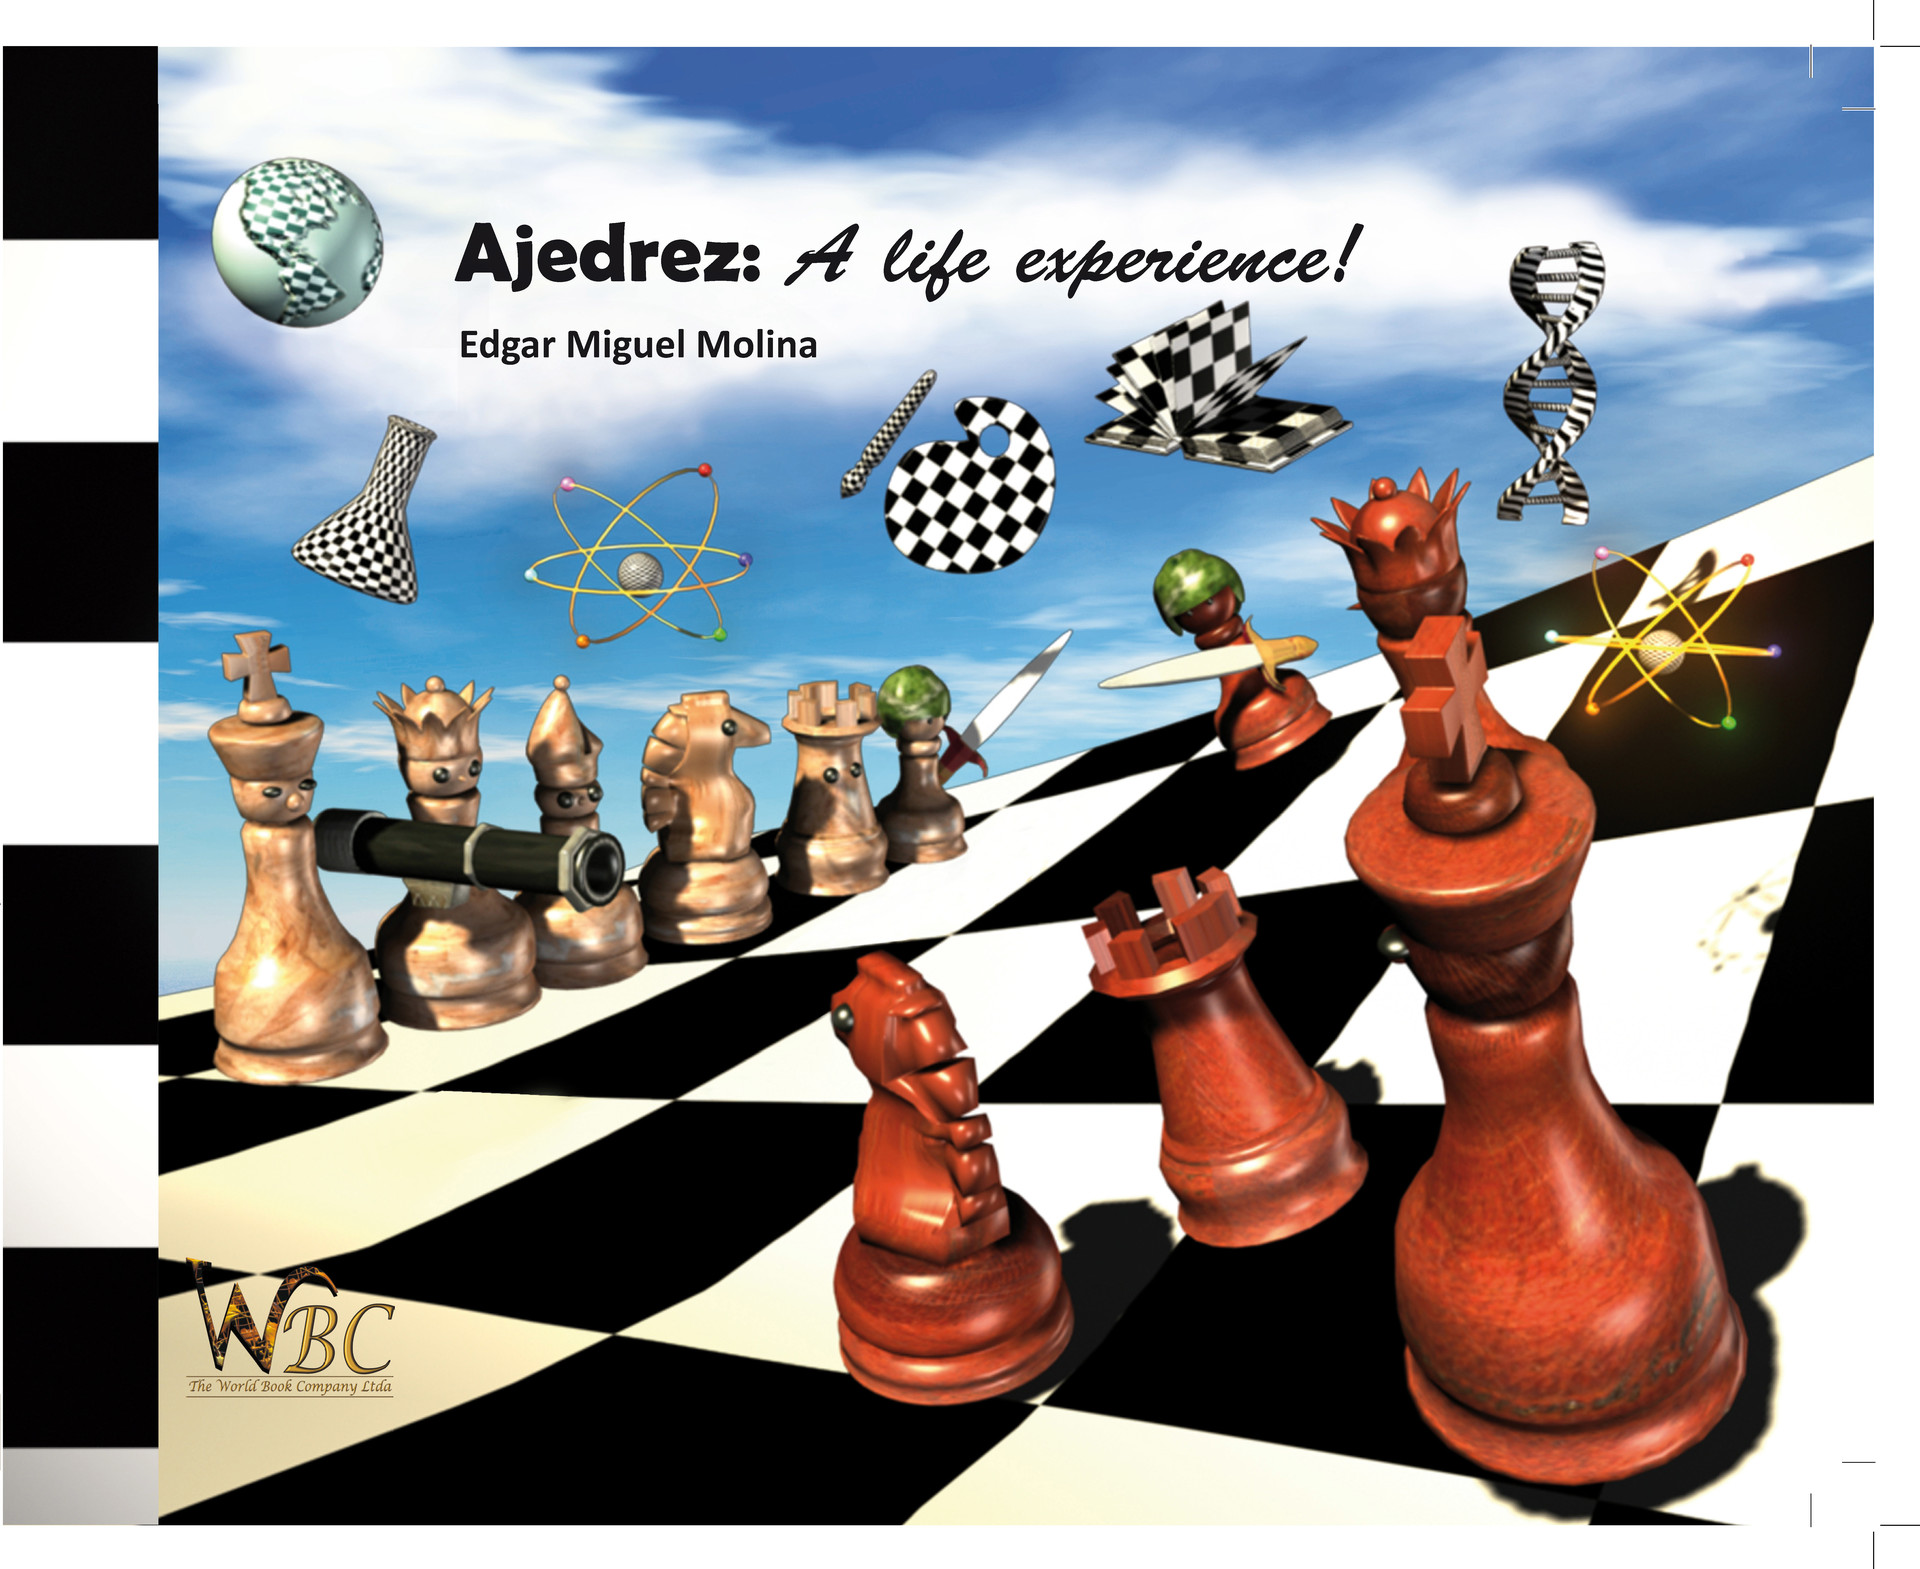 ArtStation - Portada libro de Ajedréz/ chess book cover